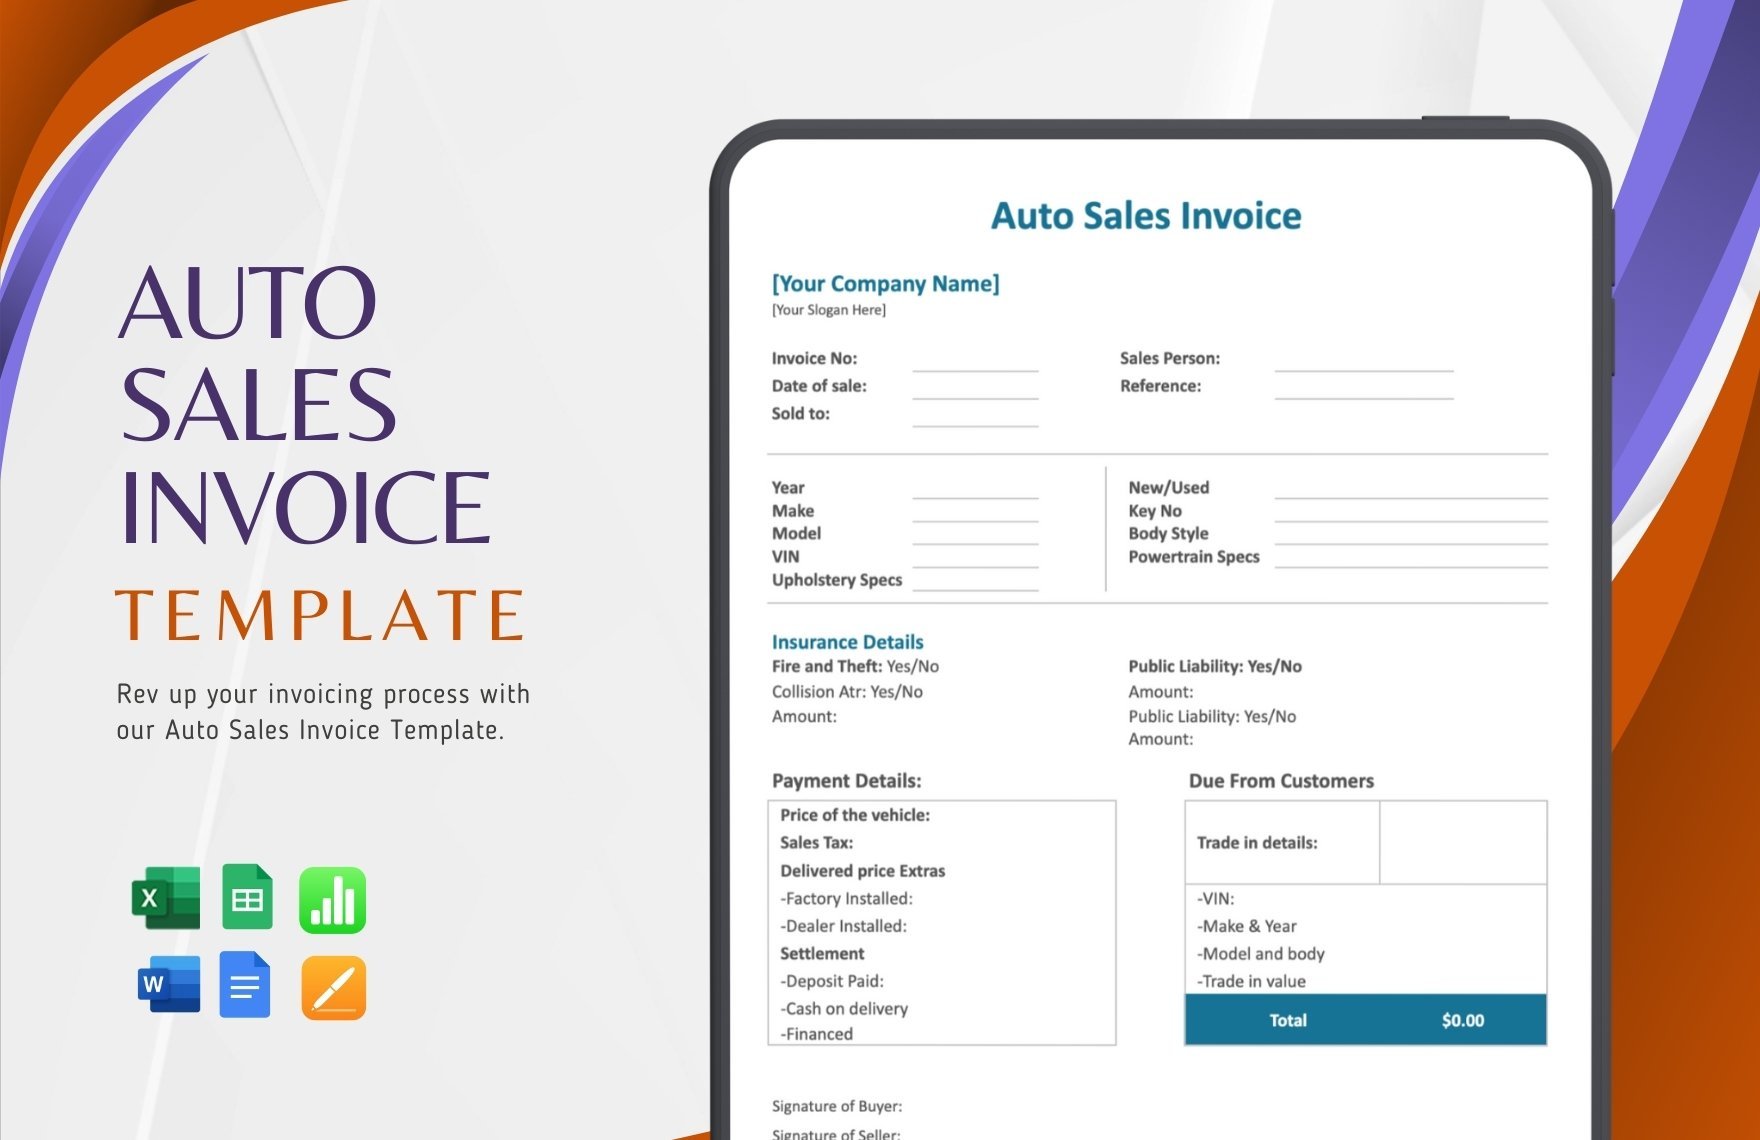 Auto Sales Invoice Template